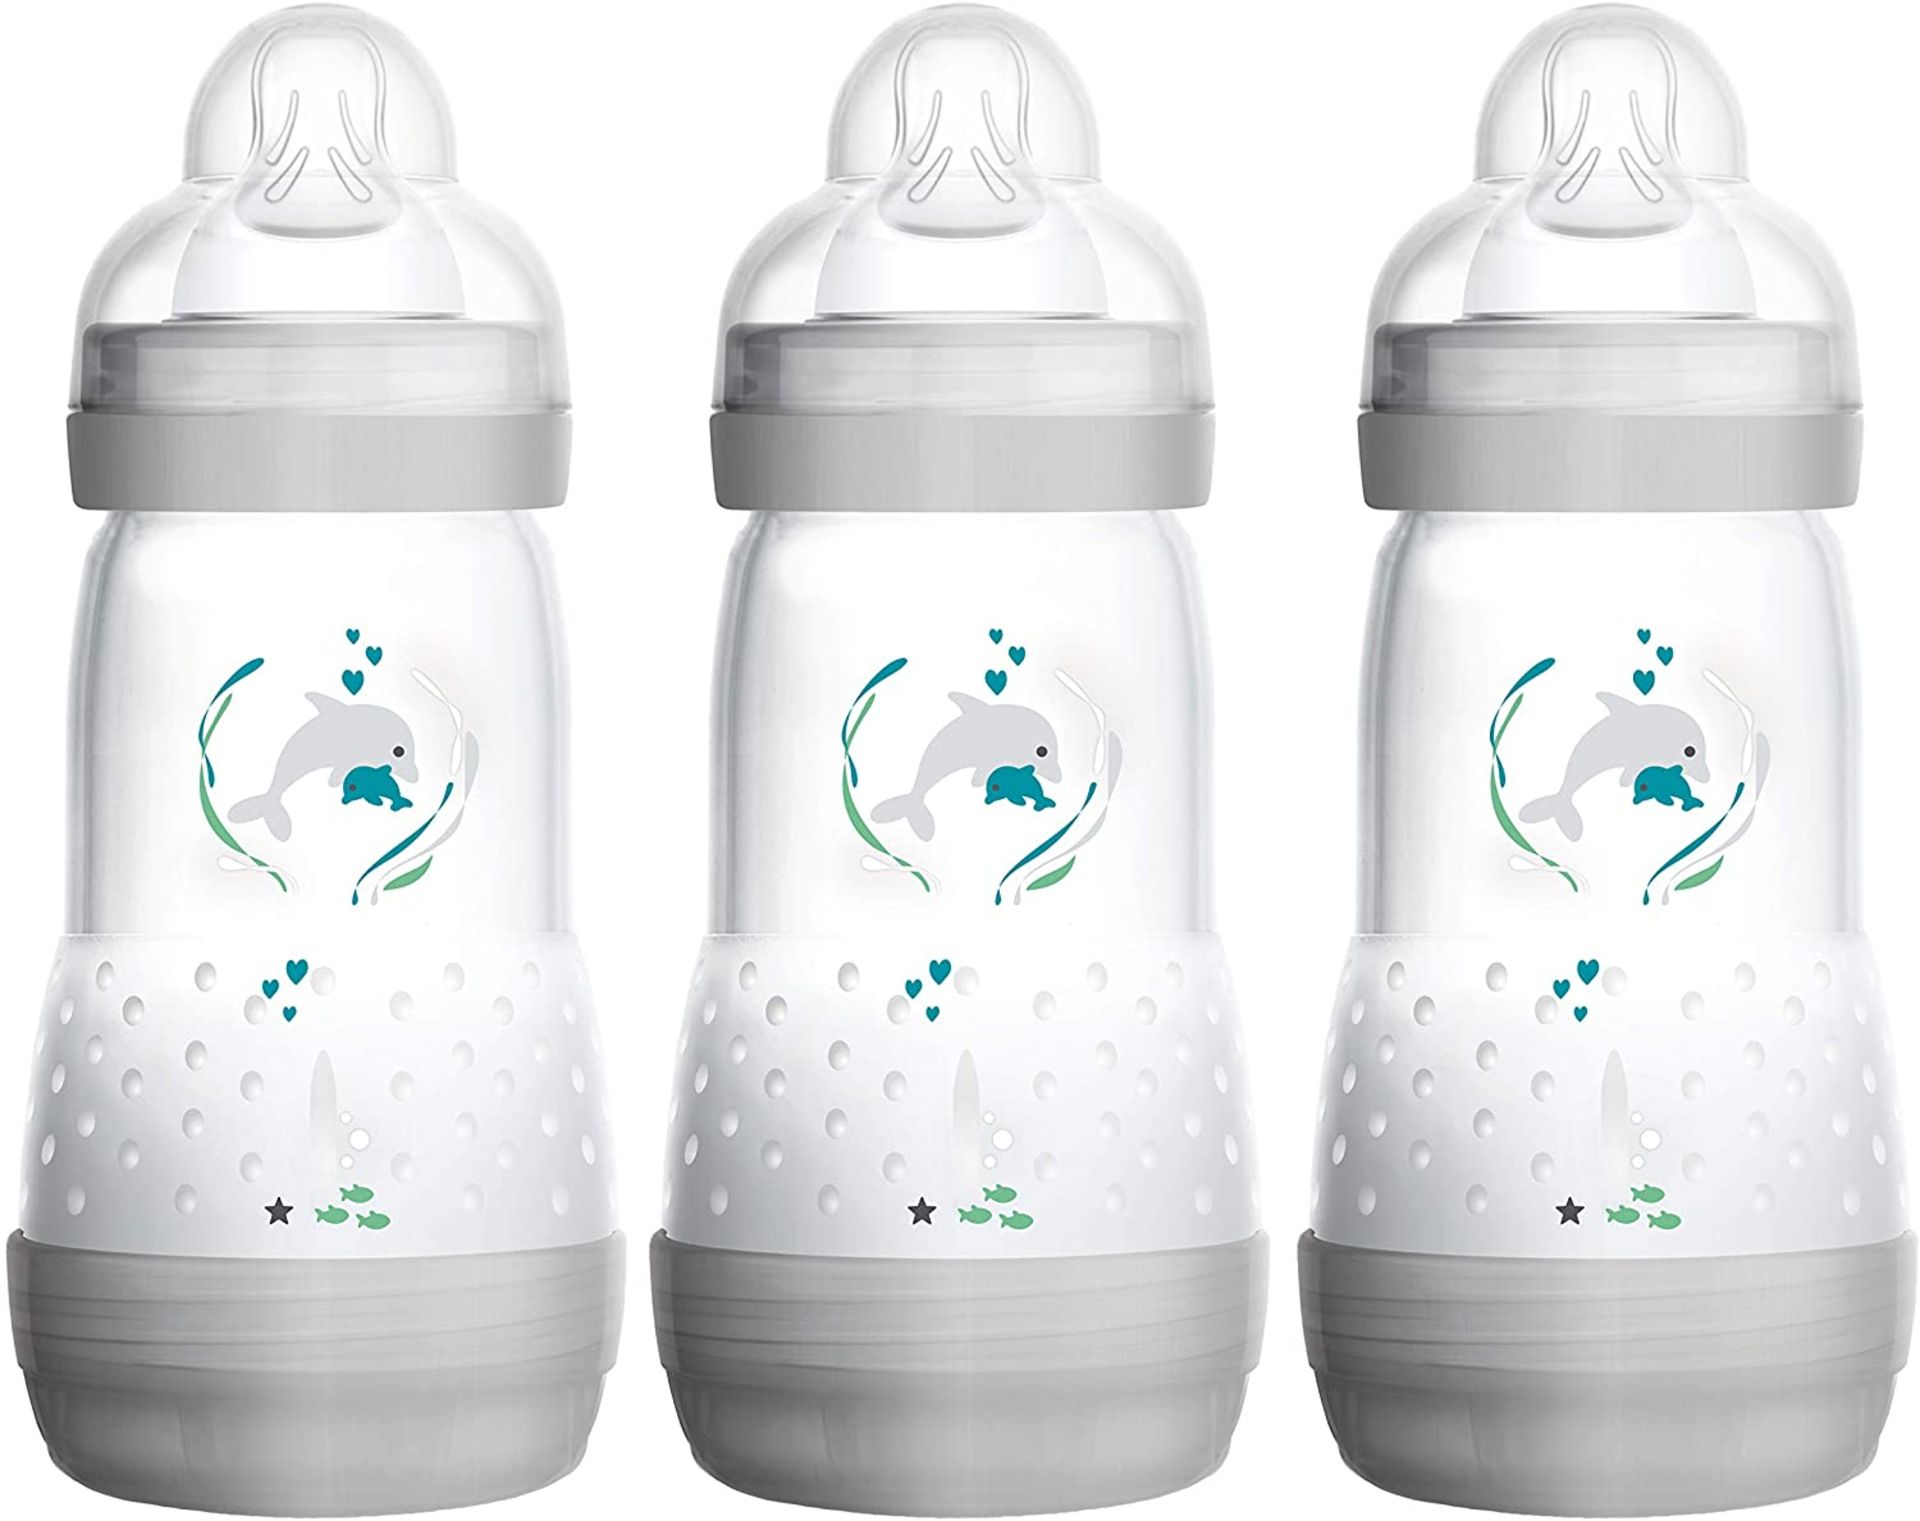 GRADE B - MAM Easy Start Anti-Colic Baby Bottle Set of 3 (260 ml) RRP £19.99Condition ReportGRADE